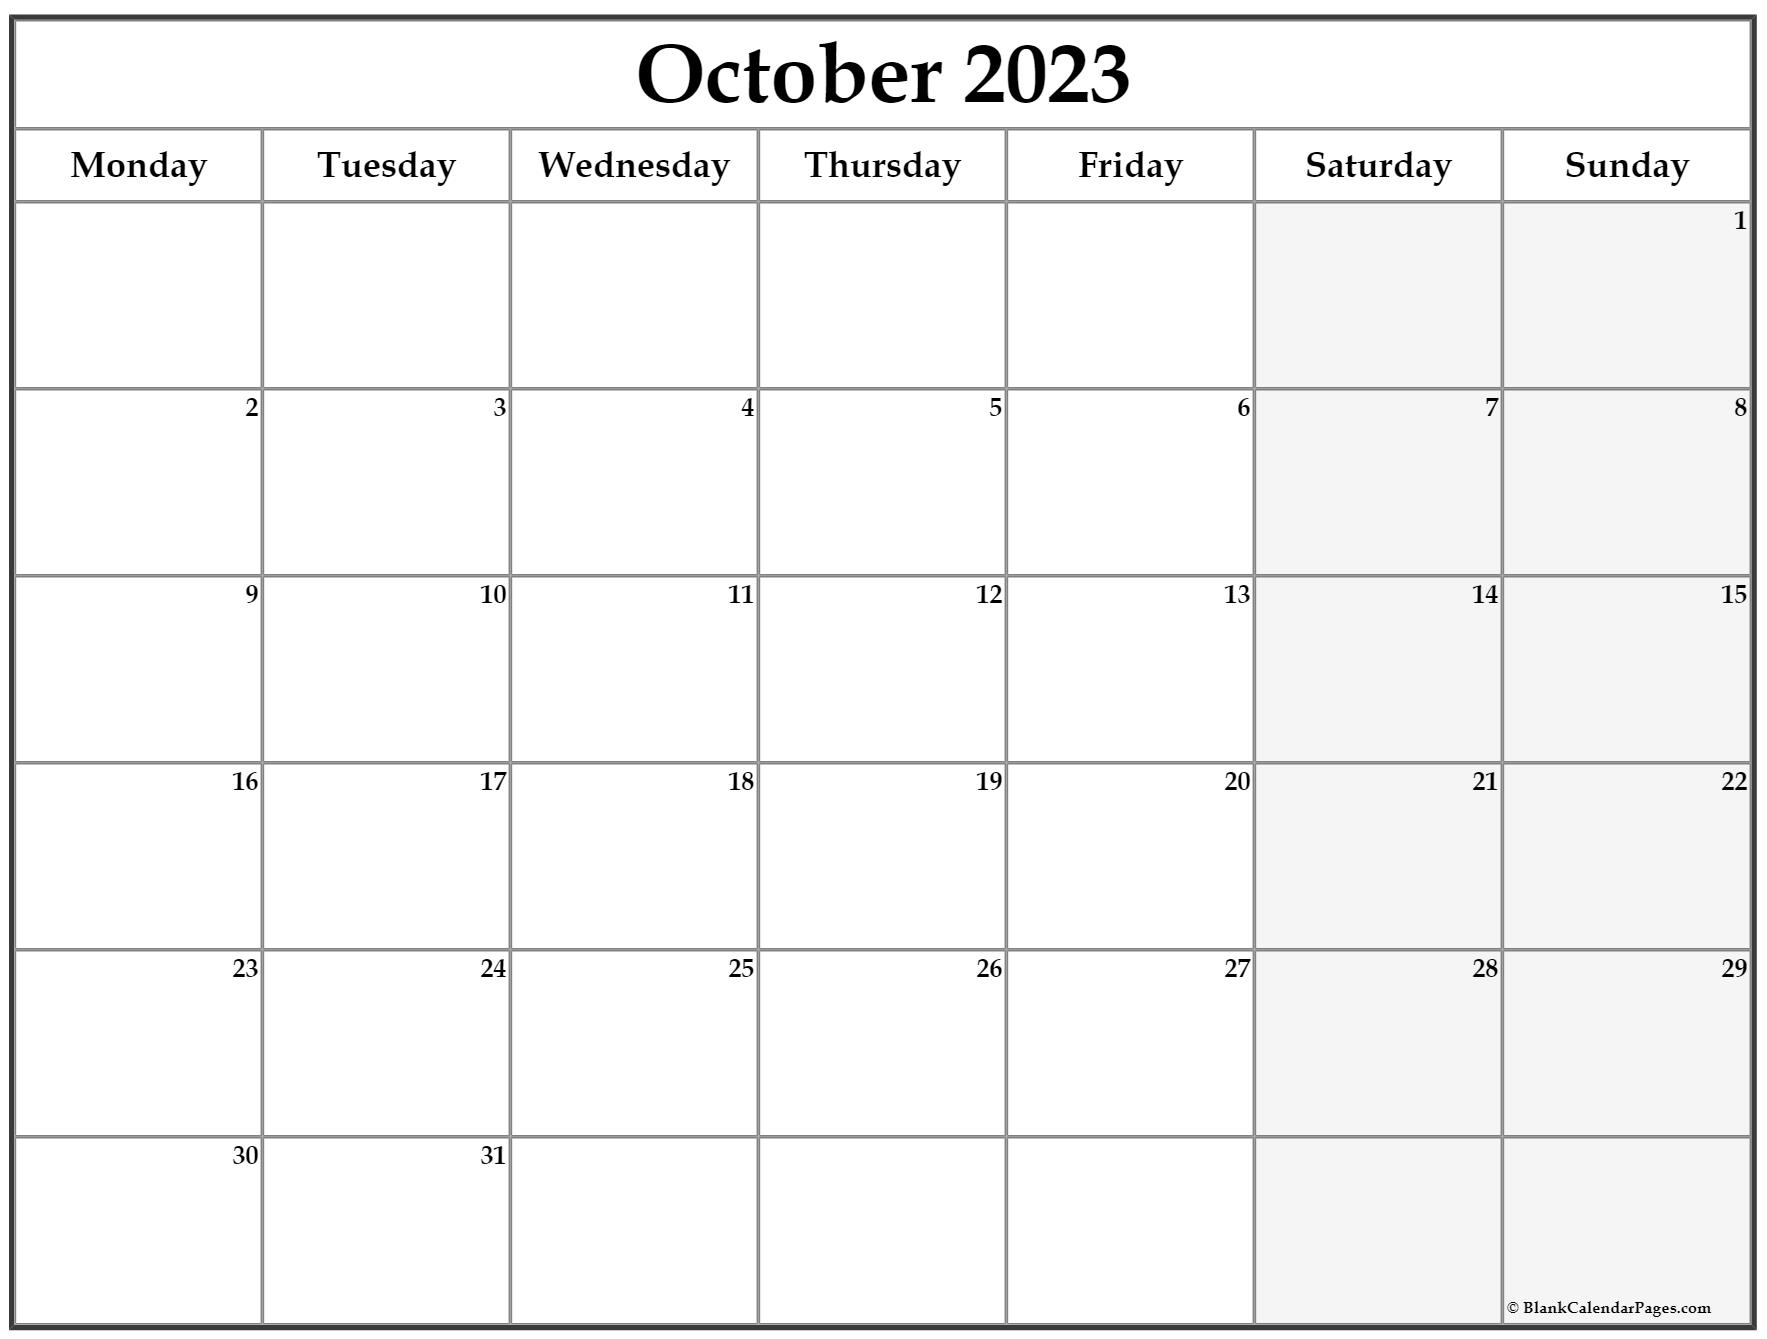 october-2023-calendar-starting-monday-get-latest-map-update